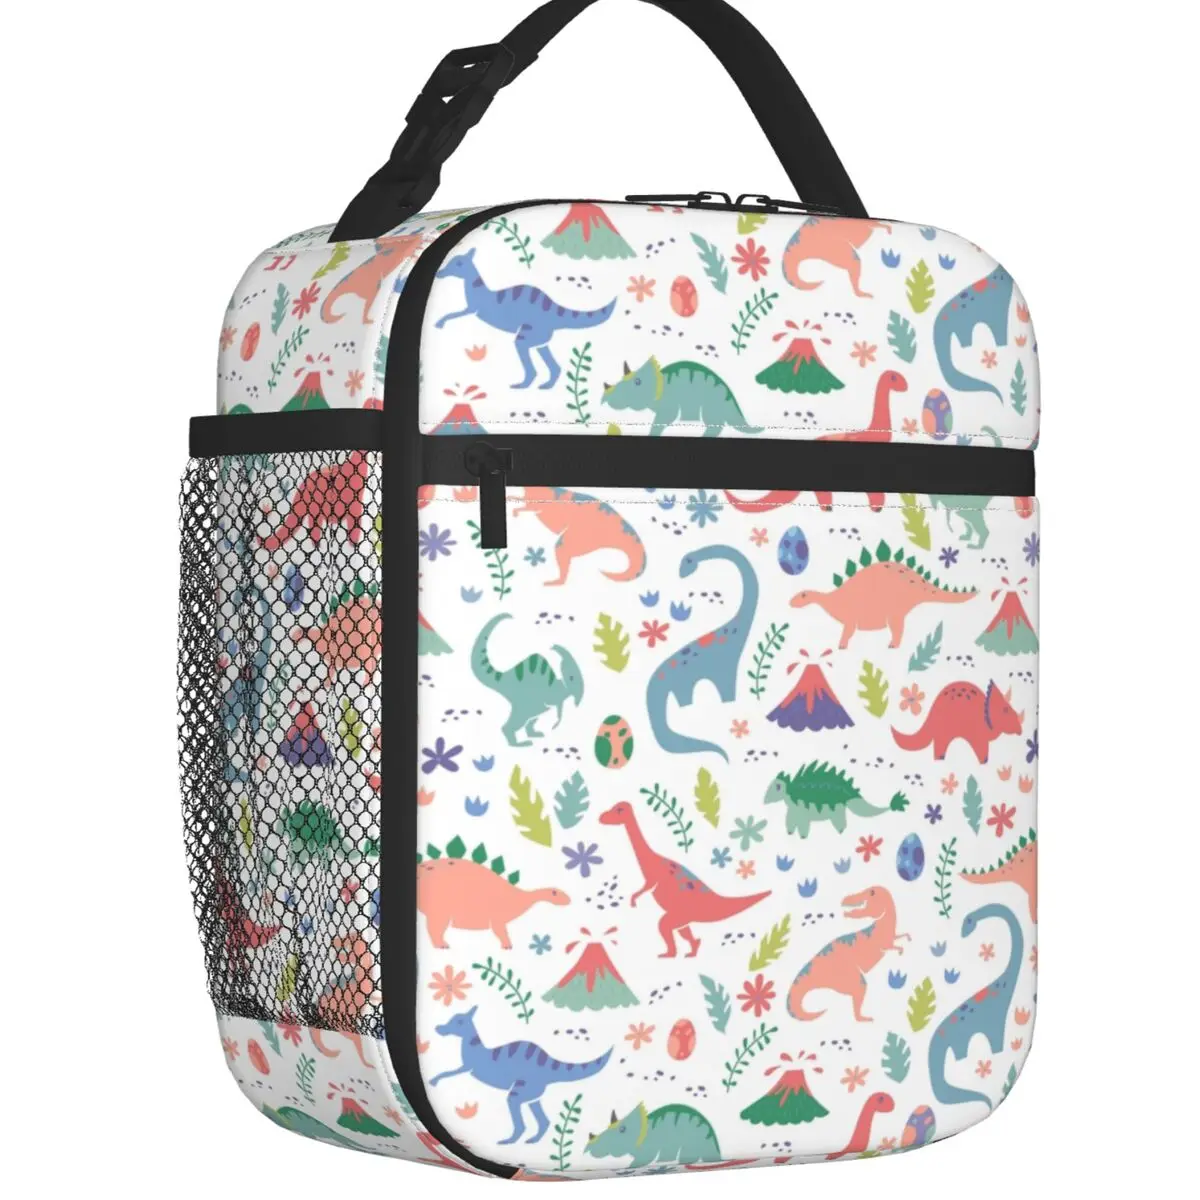 Dinosaur Cartoon Print Insulated Lunch Bag for Women Leakproof Thermal Cooler Bento Box Kids School Children